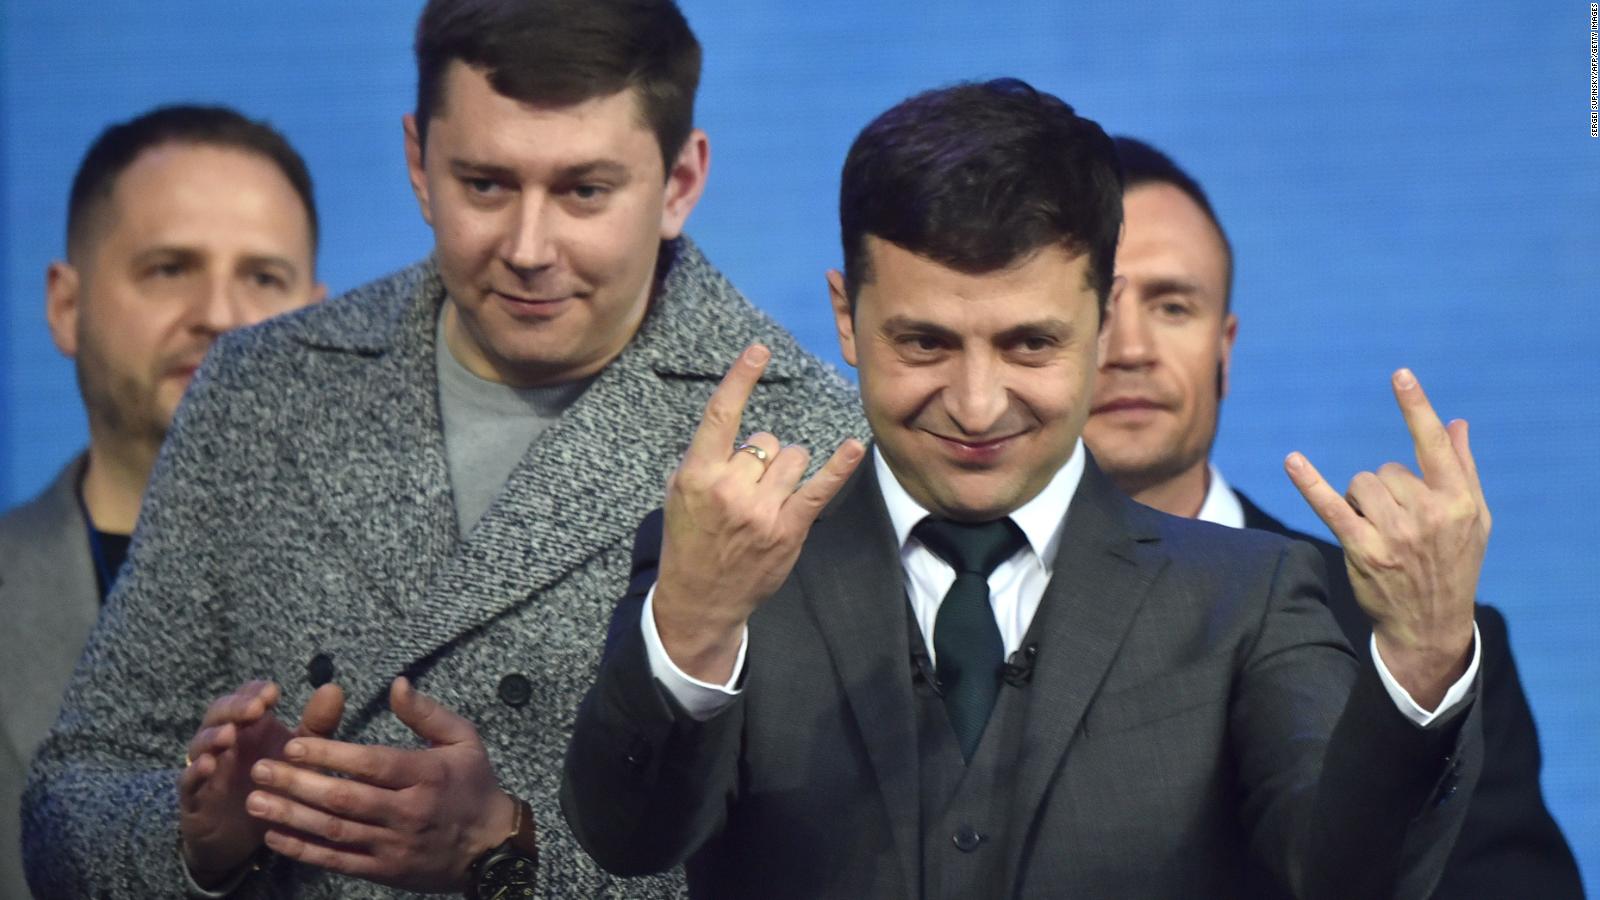 president of ukraine presentation world leaders